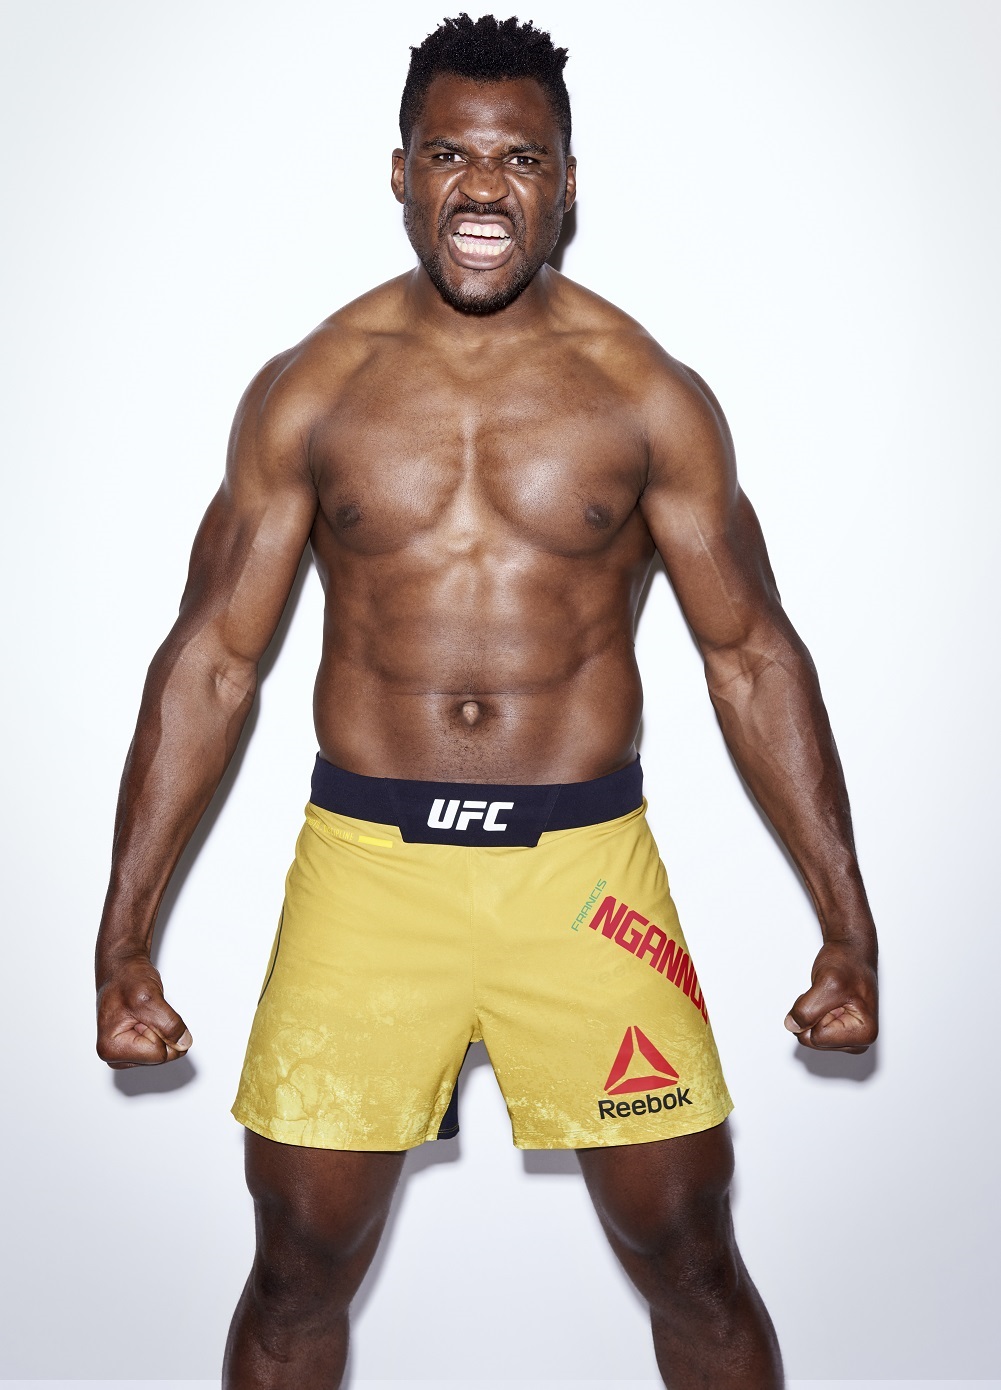 veeg Geweldige eik schreeuw Reebok, UFC unveil redesigned fighter uniforms